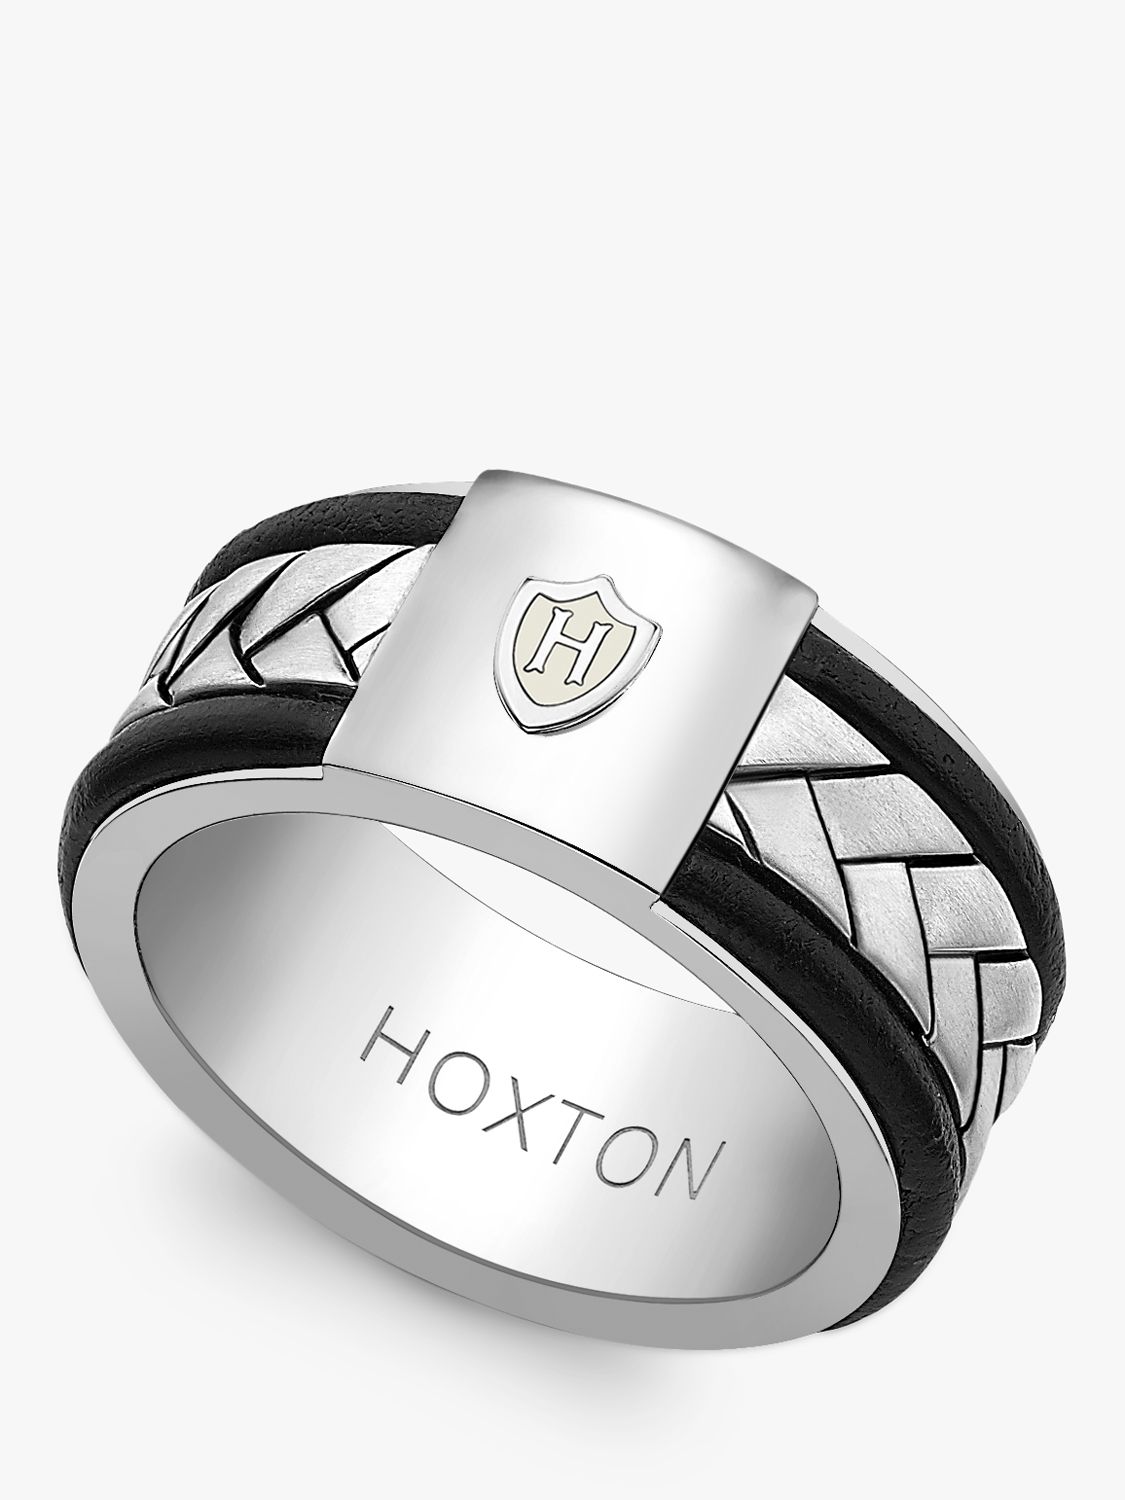 Hoxton London Men's Herringbone Leather Inlay Ring, Silver